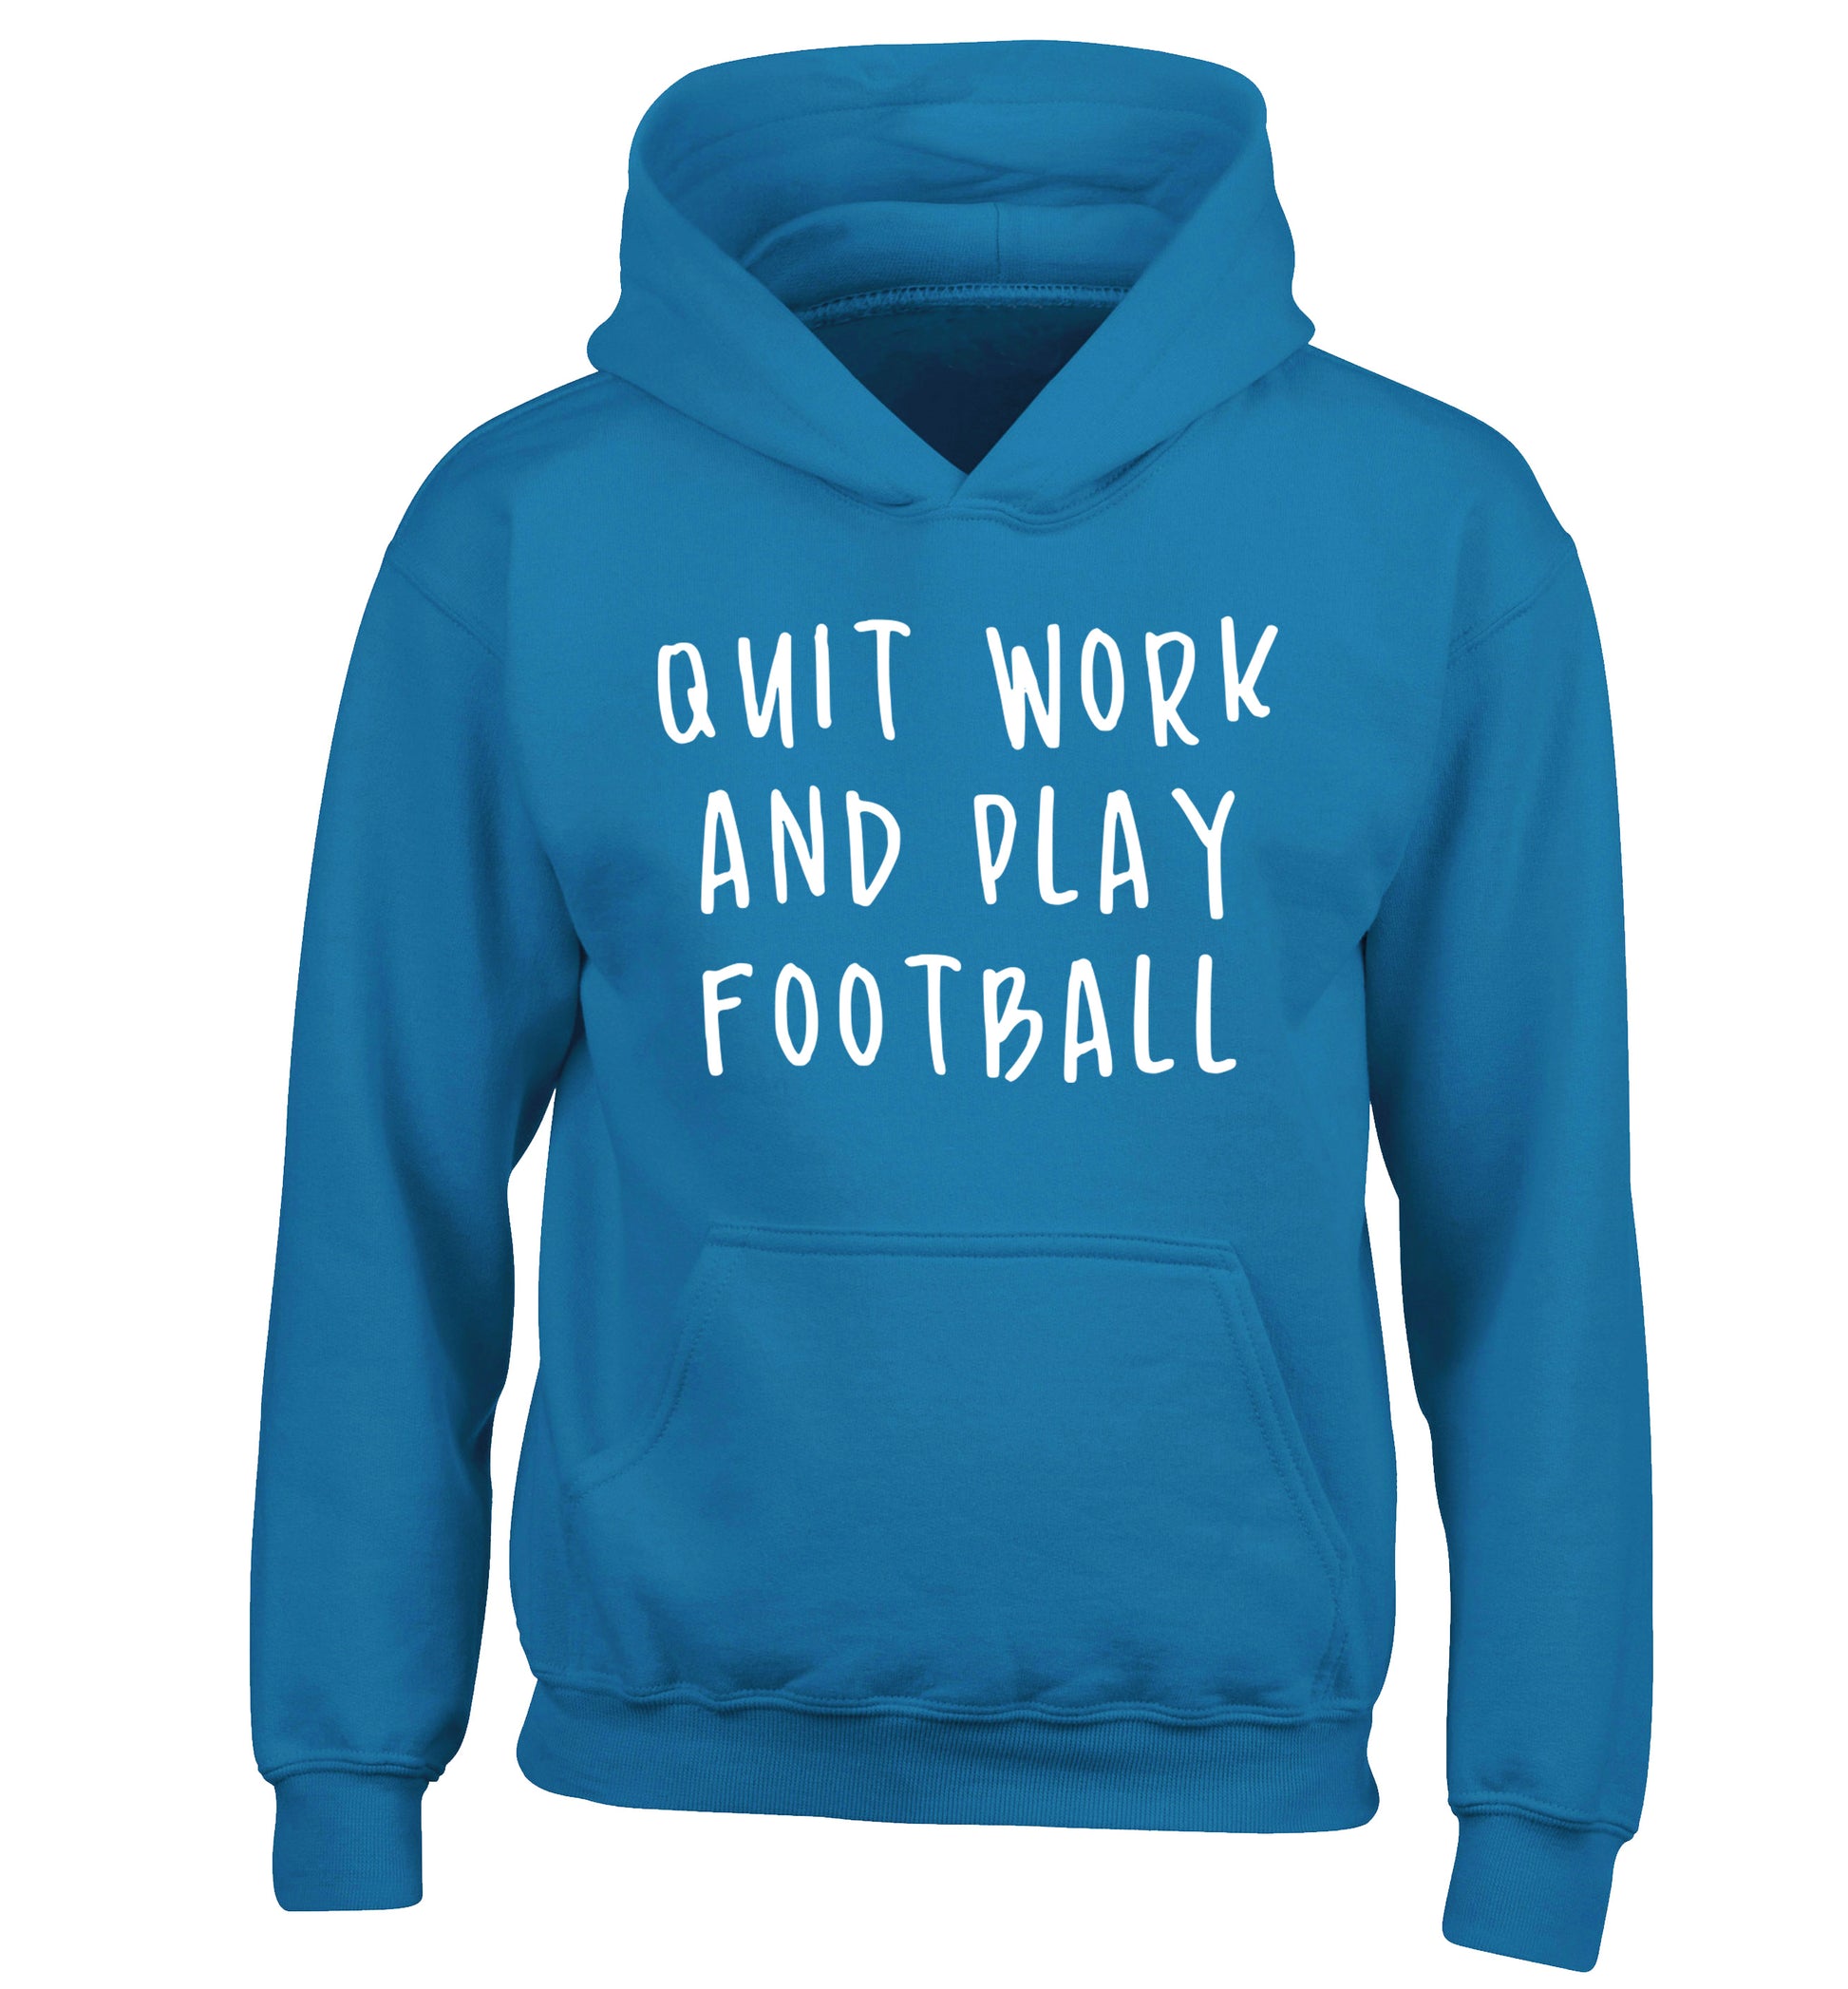 Quit work play football children's blue hoodie 12-14 Years